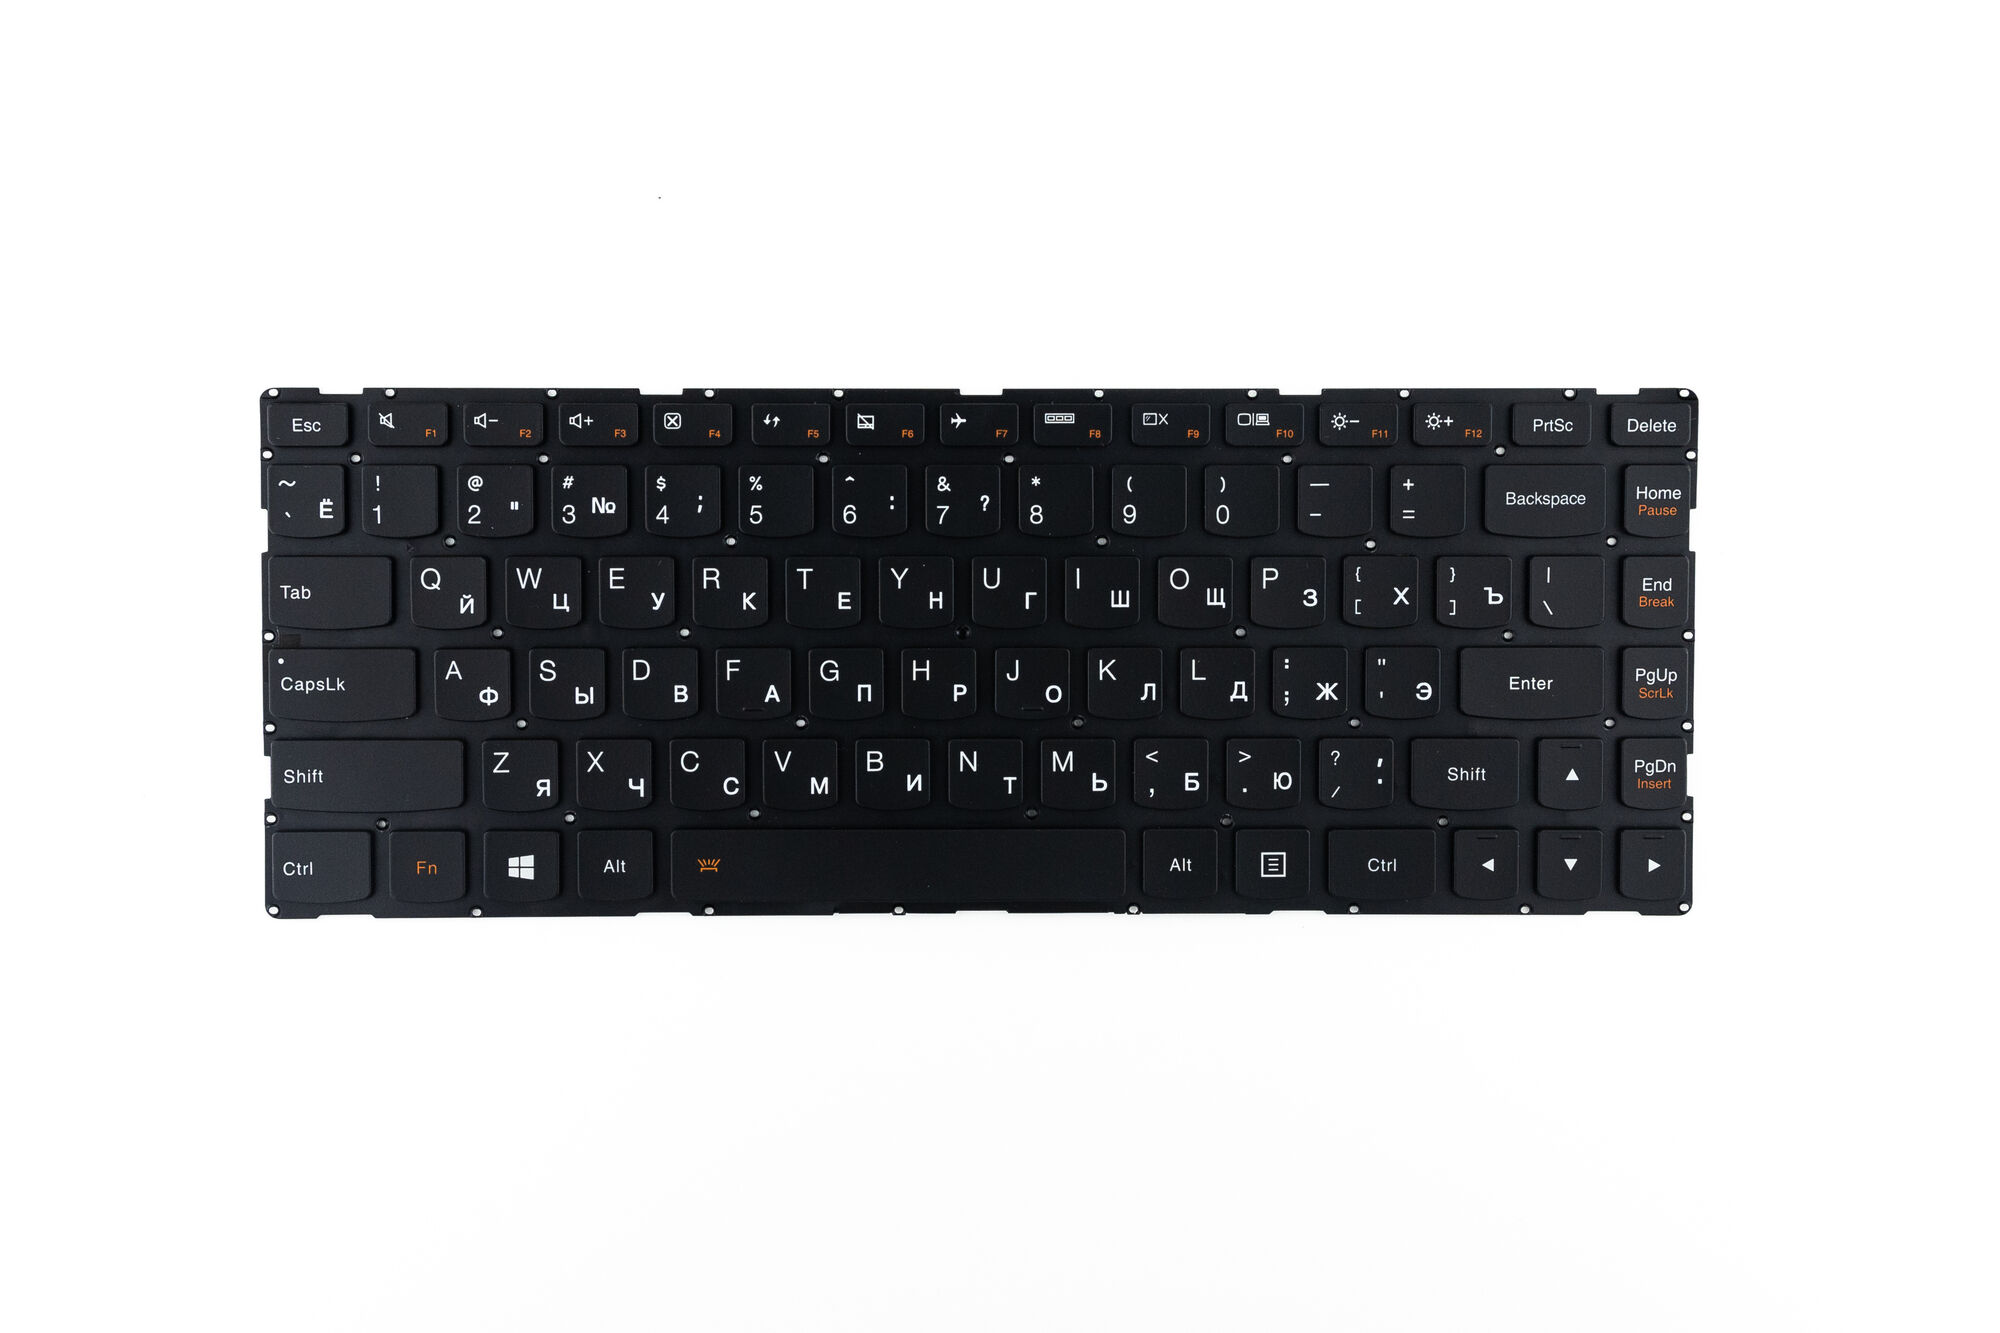 Клавиатура для ноутбука Lenovo G400 G405S с подсветкой p/n: V-142920AS1 9Z.NAASW.L0R NSK-BLLSW